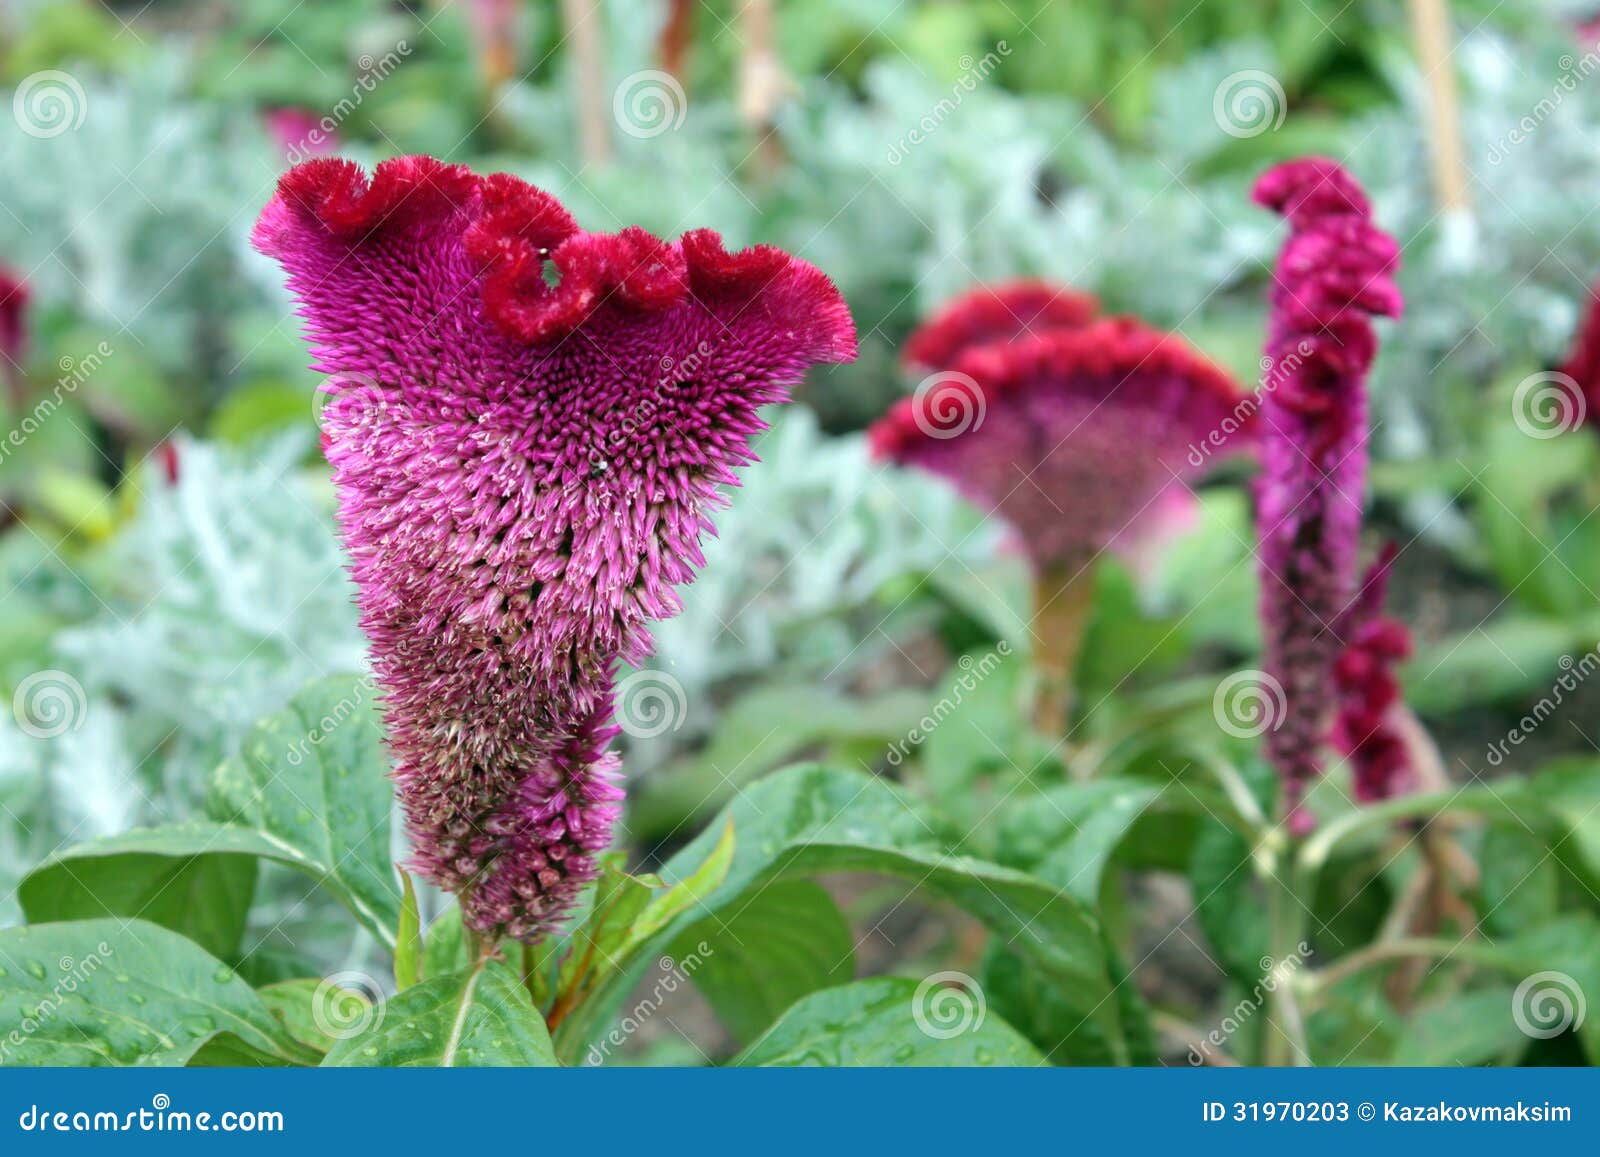 Celosia Cristata Cockscomb Flower Stock Image Image Of Bush Botany 31970203